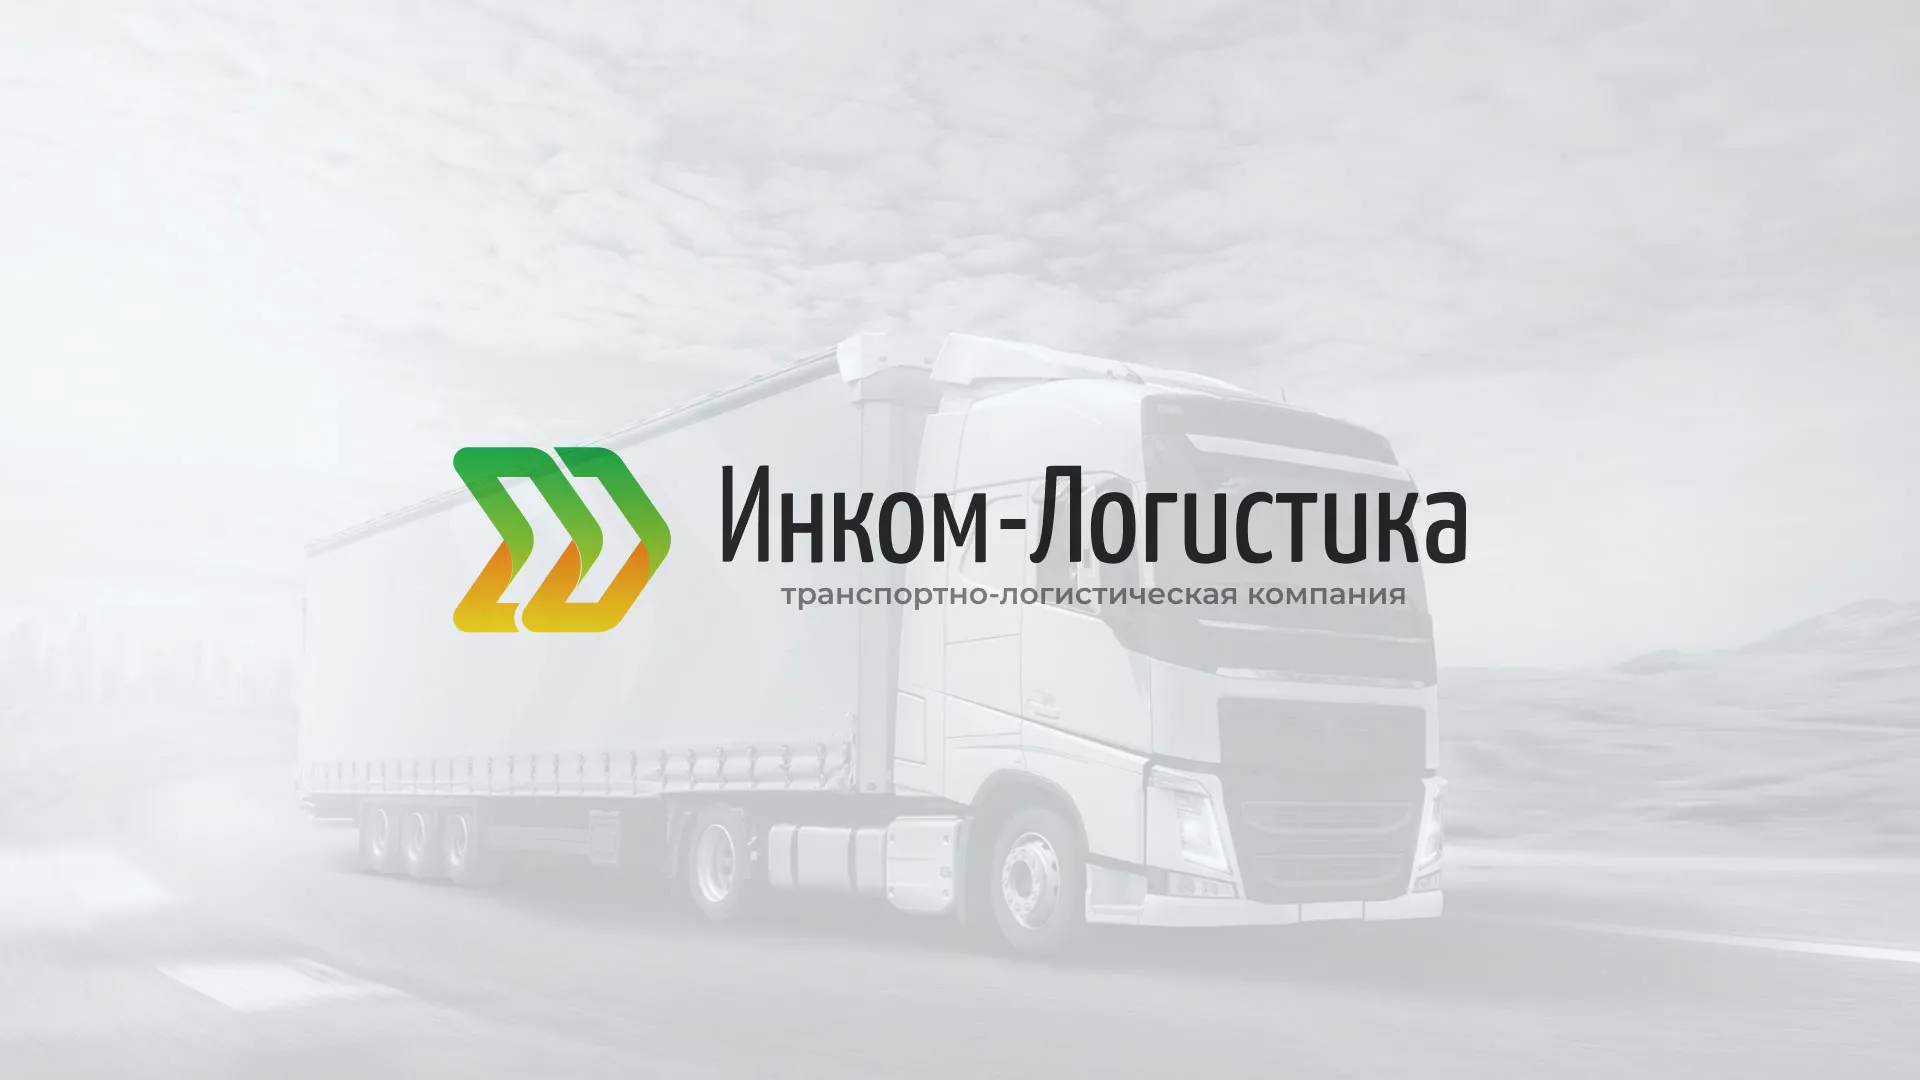 Разработка логотипа и сайта компании «Инком-Логистика» в Шебекино